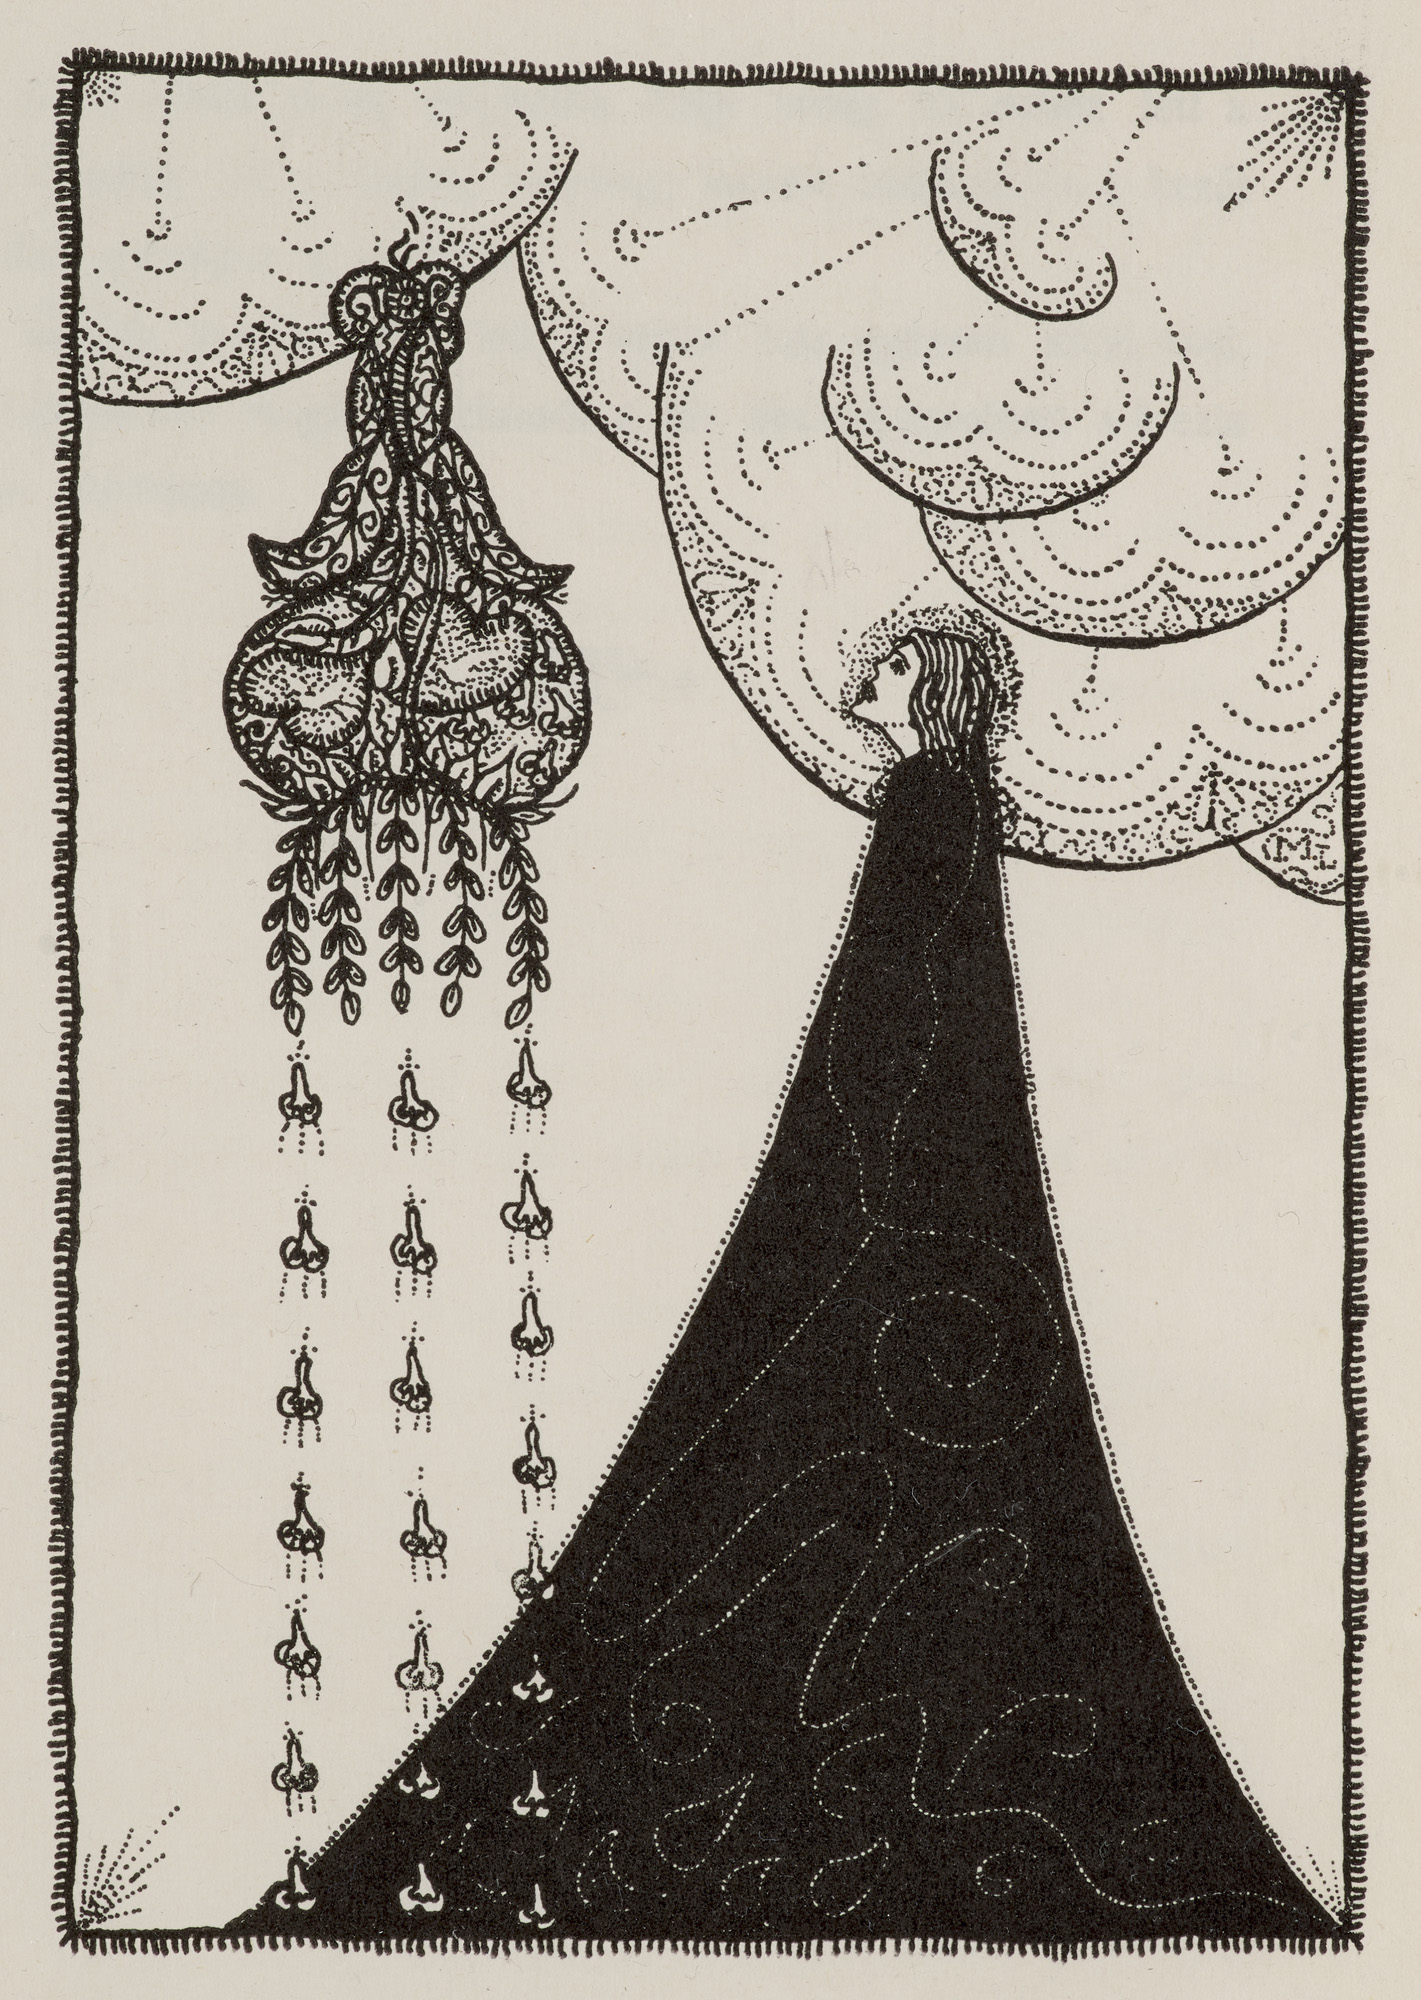 Aranyfüst. Illustrations and book decoration by Ladislas Medgyes. Budapest, Ráth Mór, 1913. | src Jeschke van Vliet